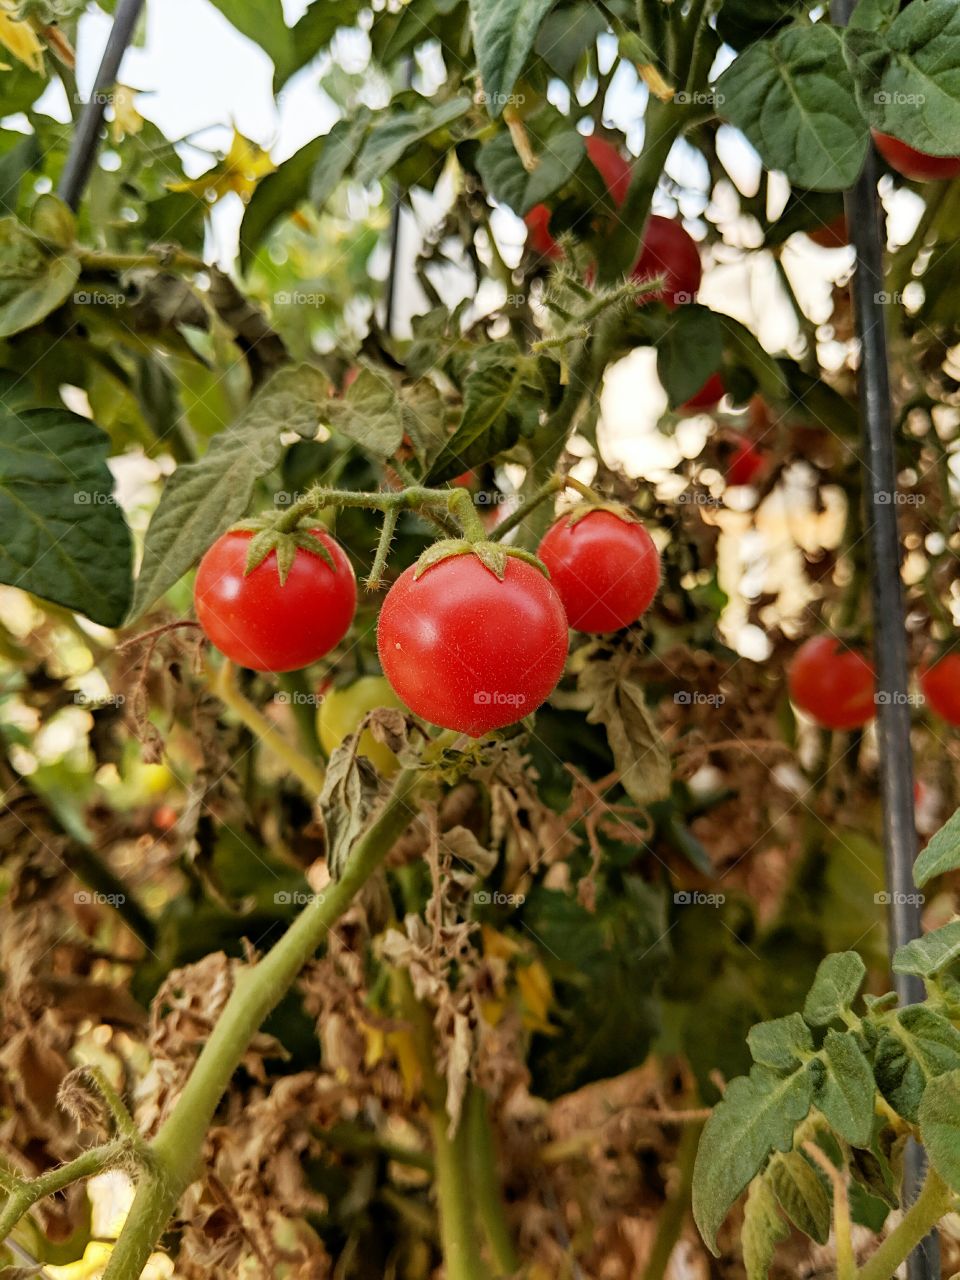 Tiny tomatoes